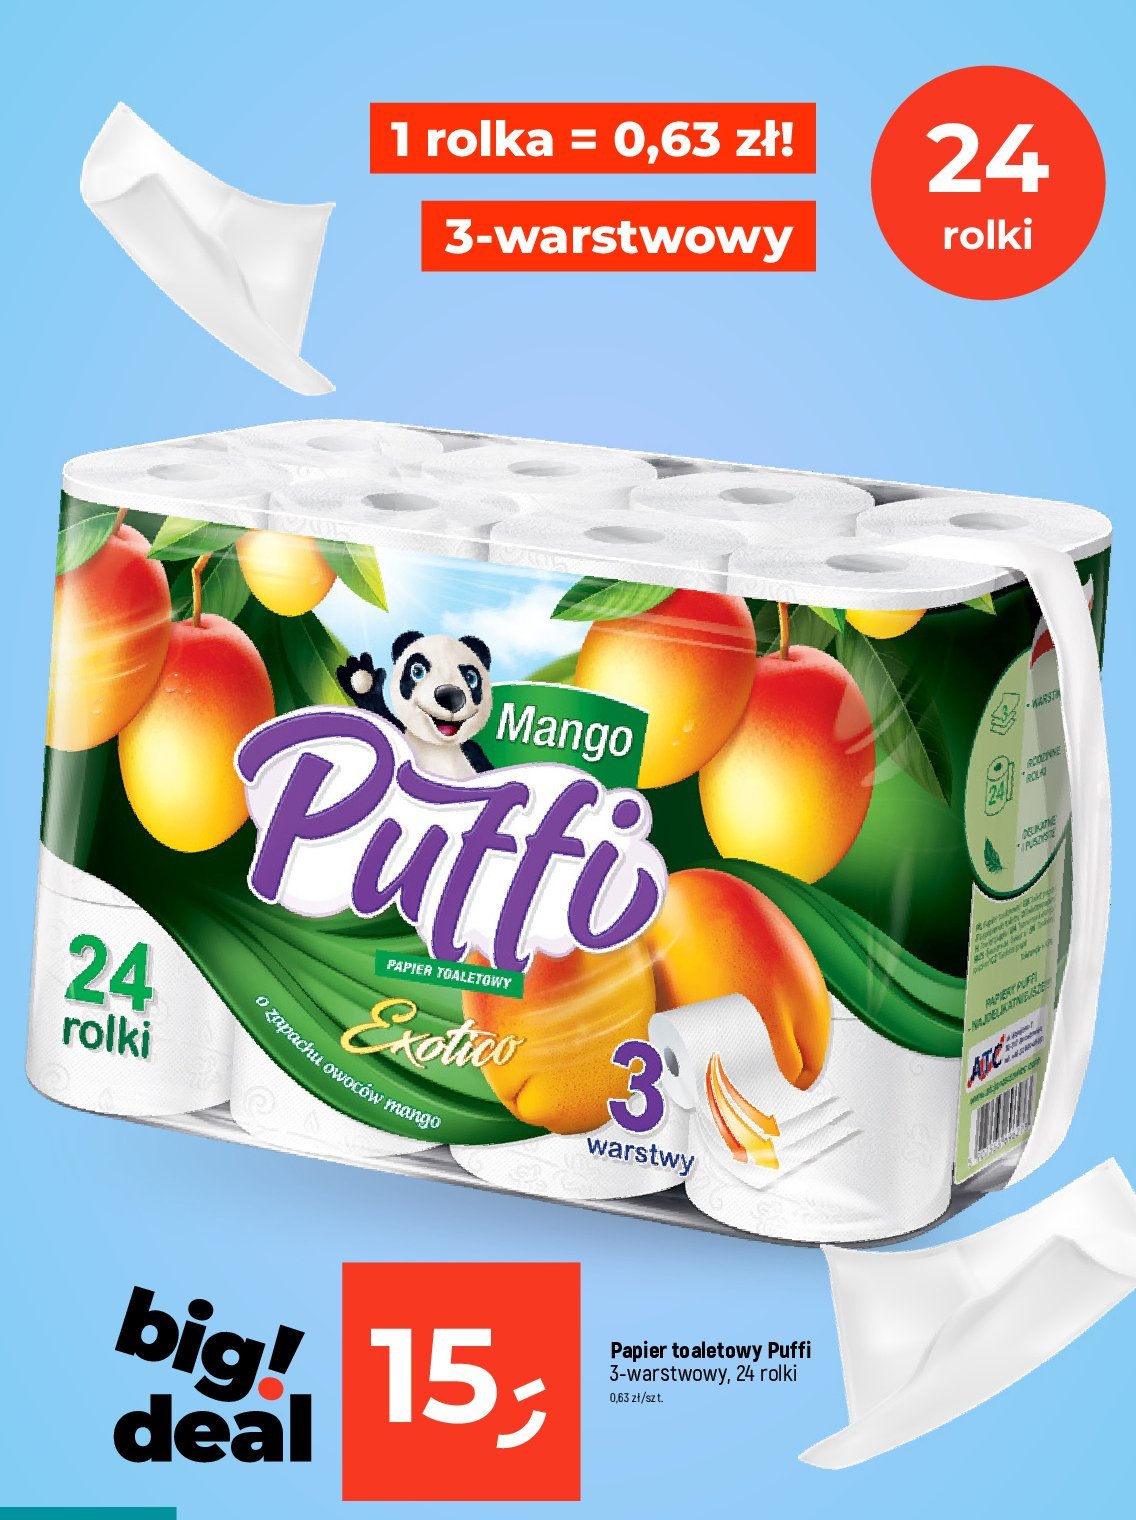 Papier toaletowy mango Puffi promocja w Dealz